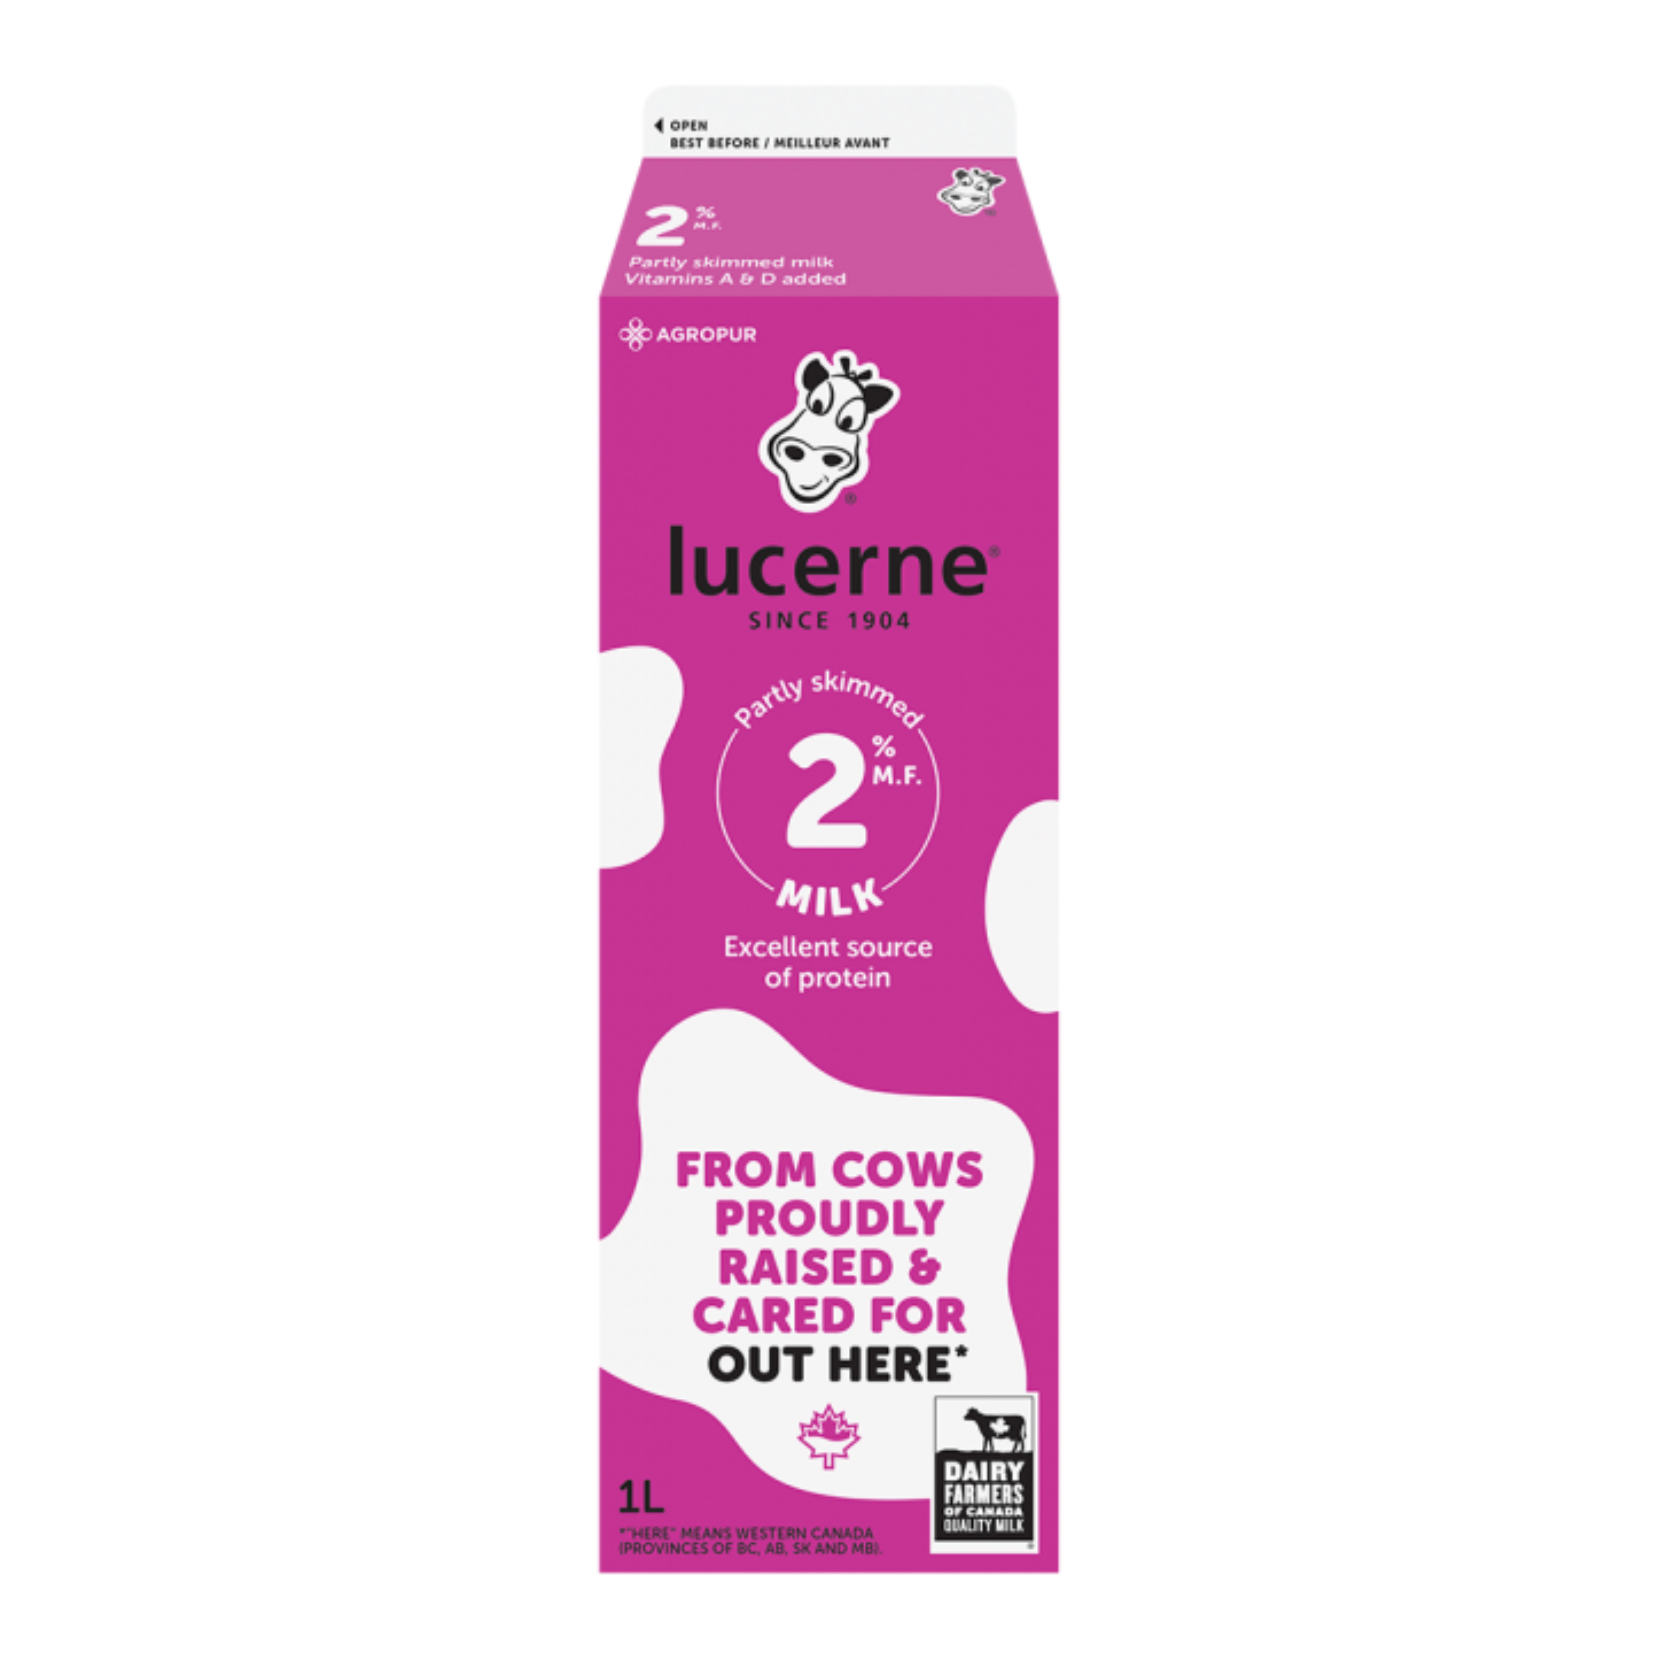 Lucerne 2% Milk 1L